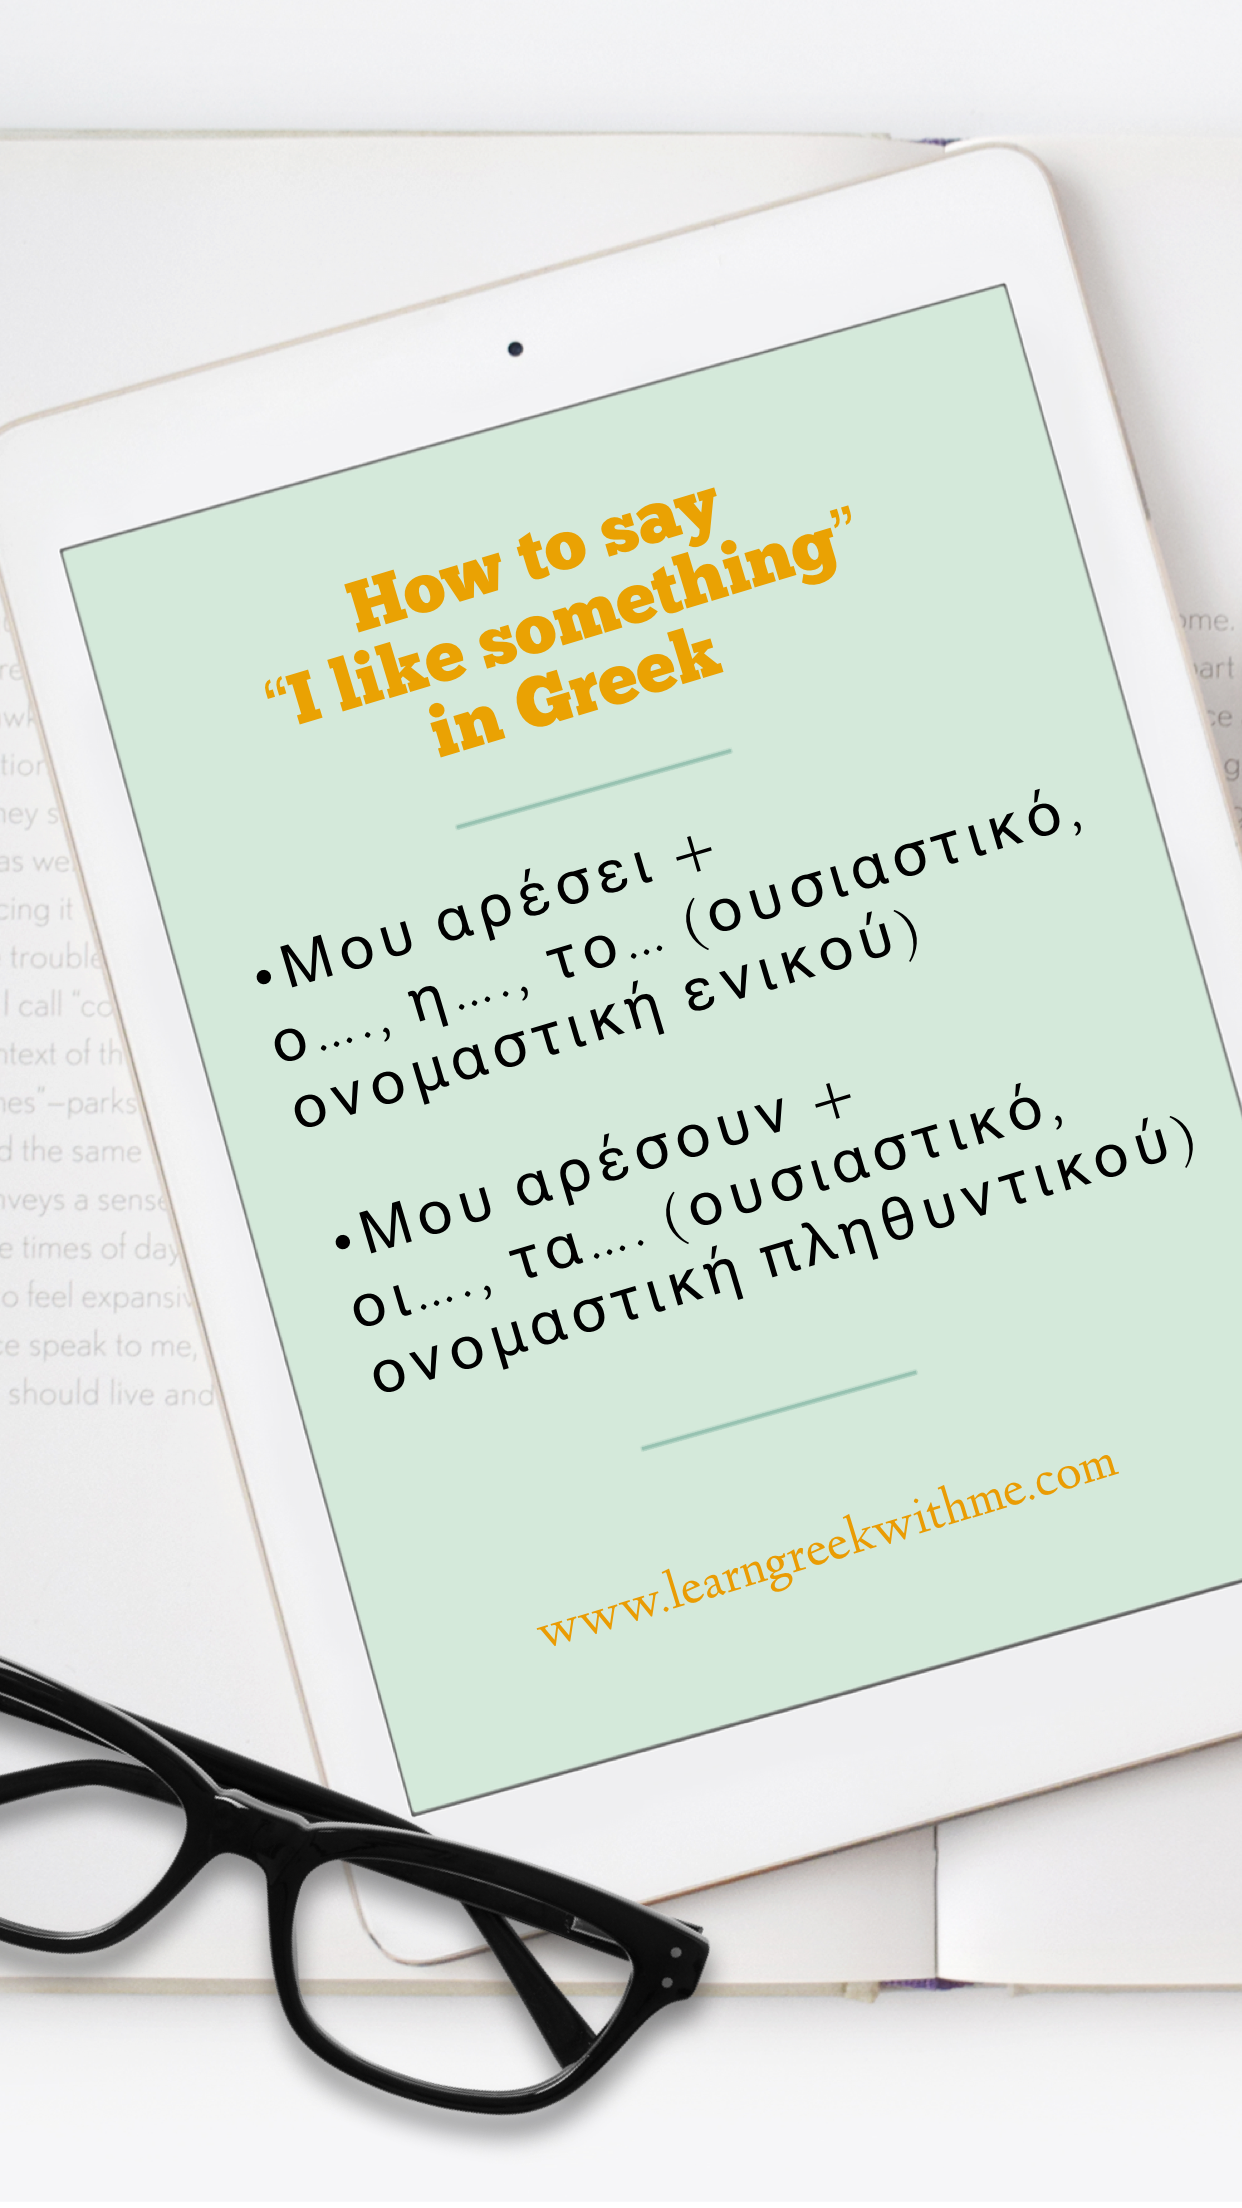 How to say “I like something” in Greek